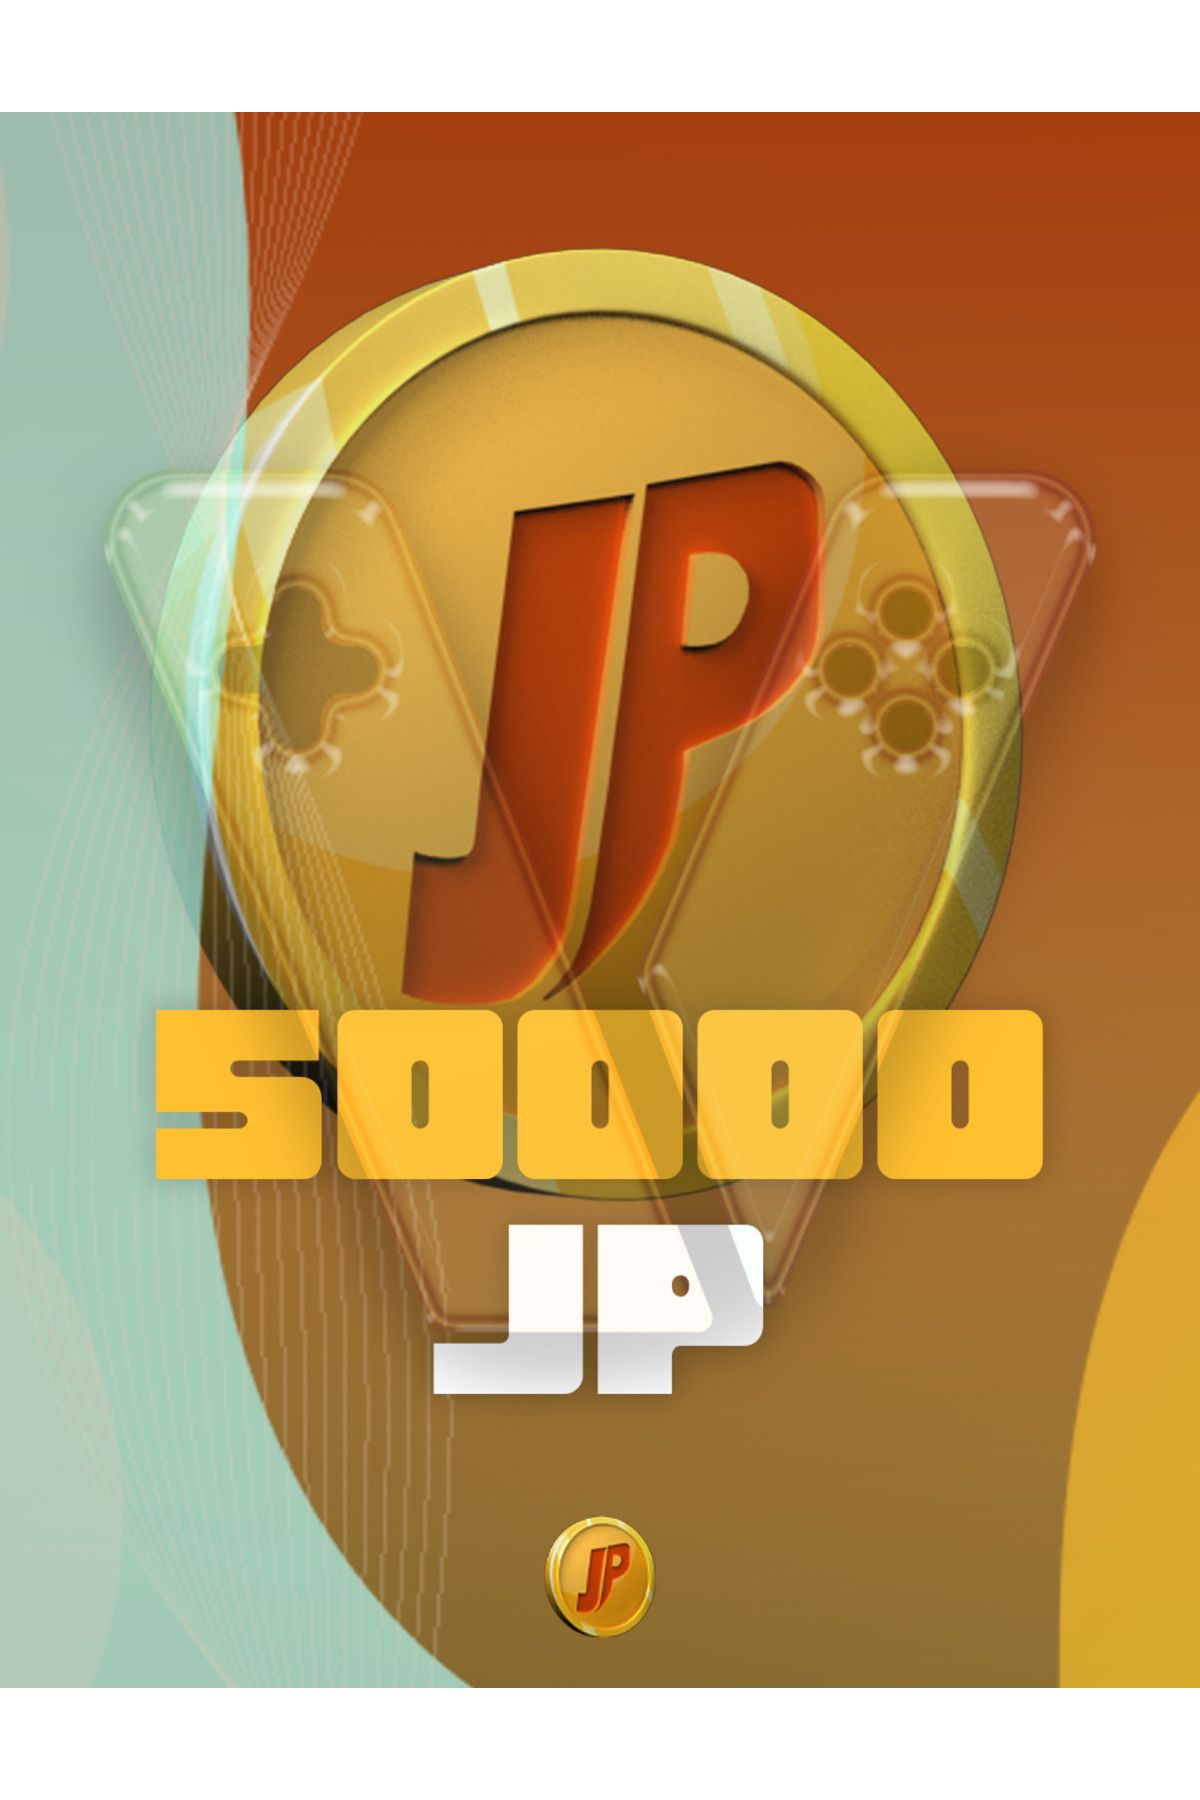 Joygame 50,000 JP (Joypara)